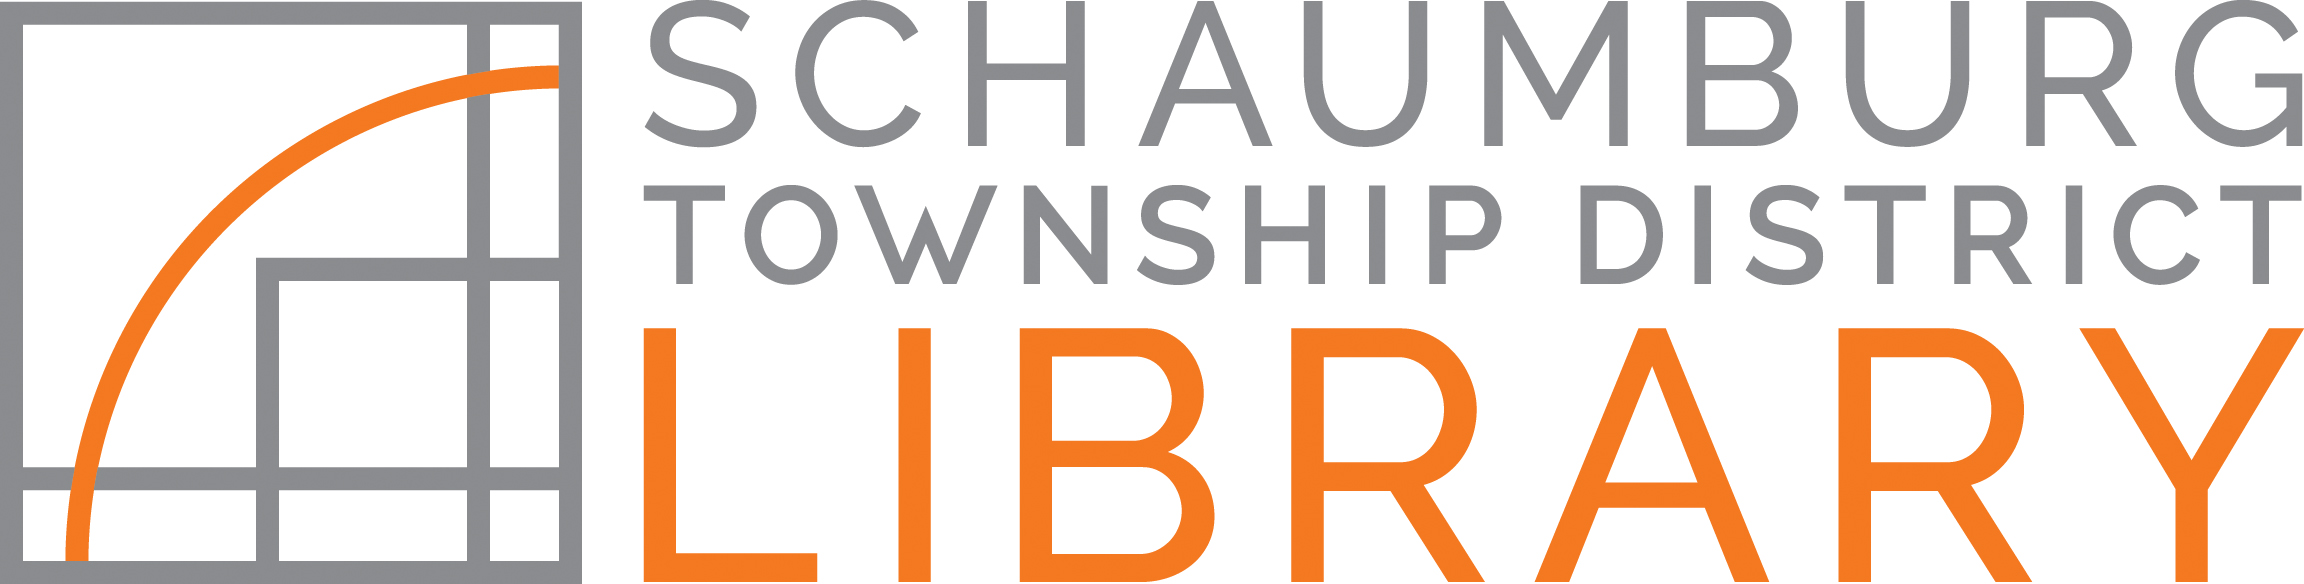 Schaumburg Township District Library